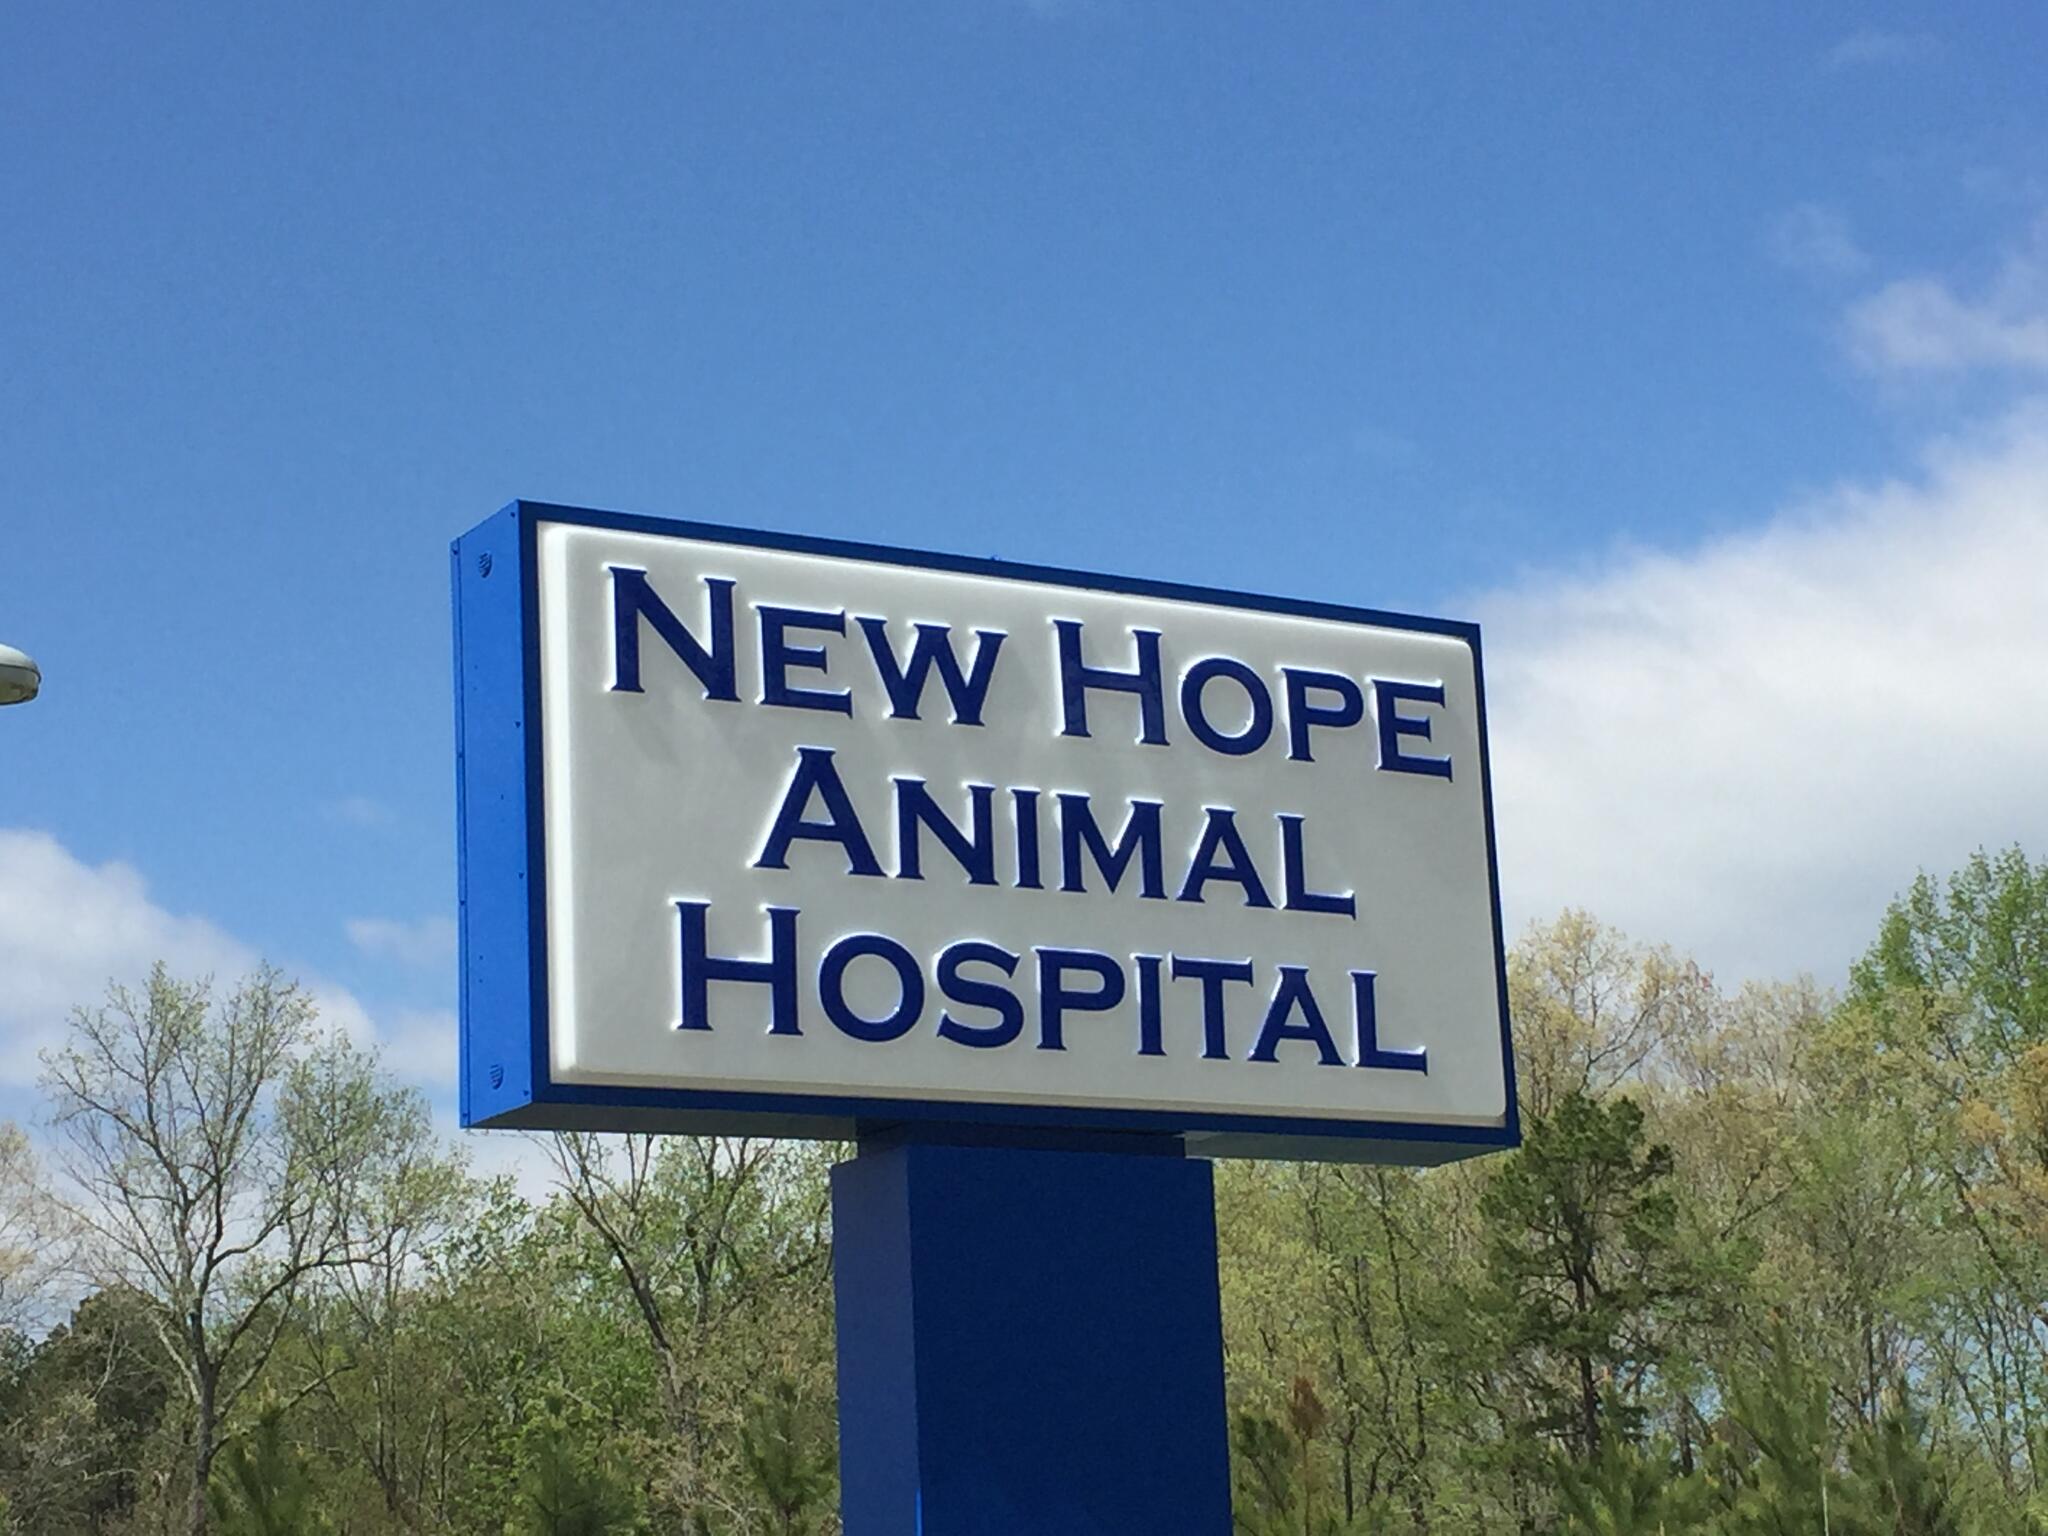 New Hope Animal Hospital - Durham, NC - Nextdoor